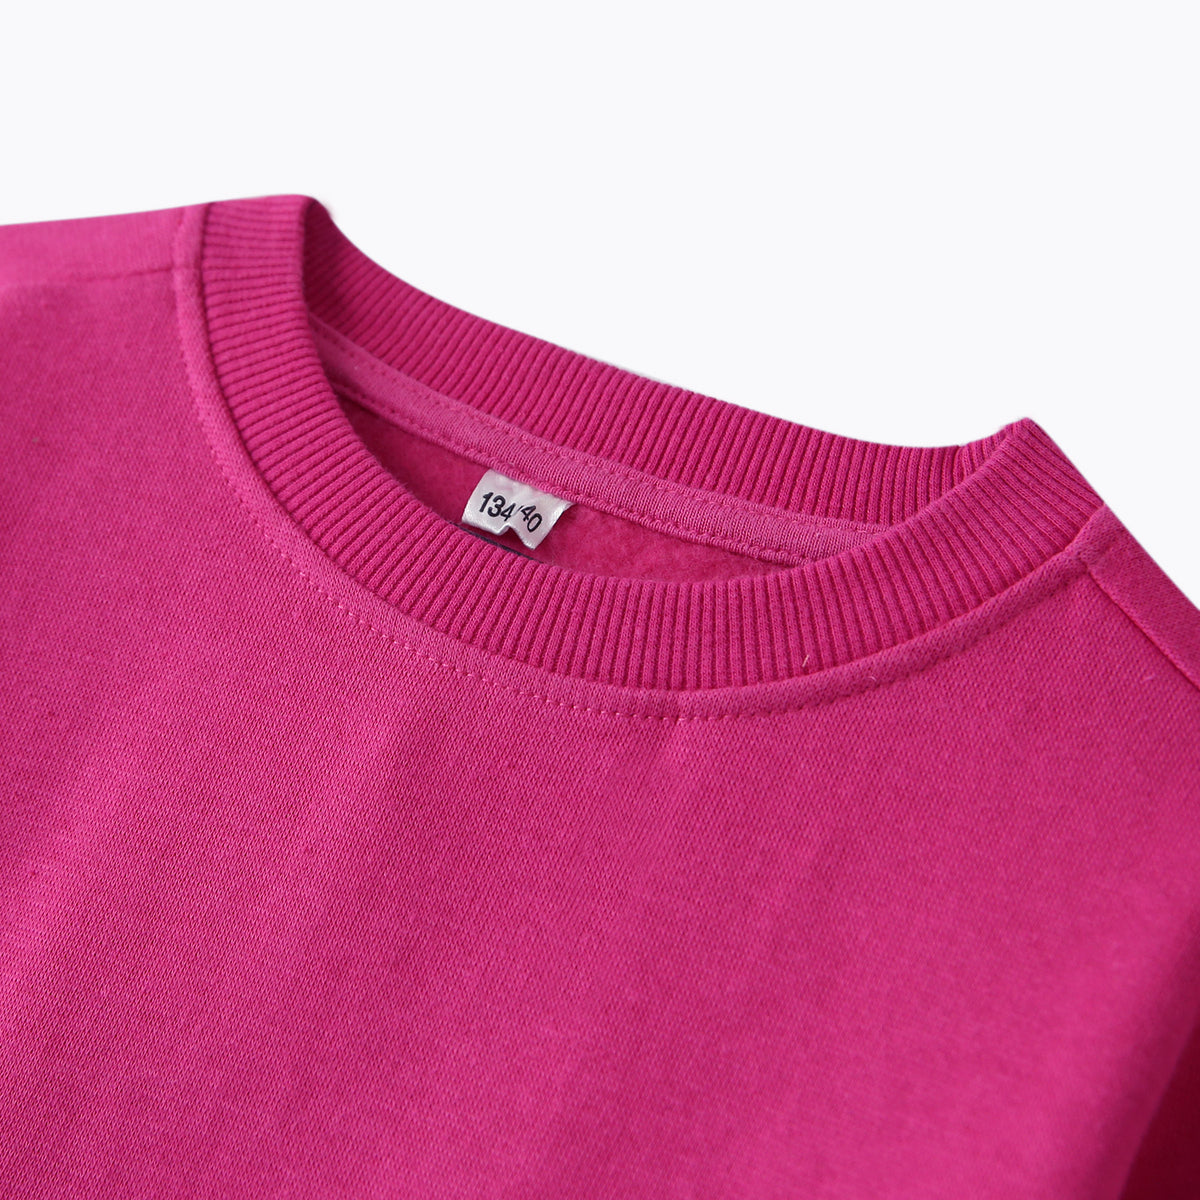 Premium Quality Printed Fleece Pink Sweatshirt For Girls